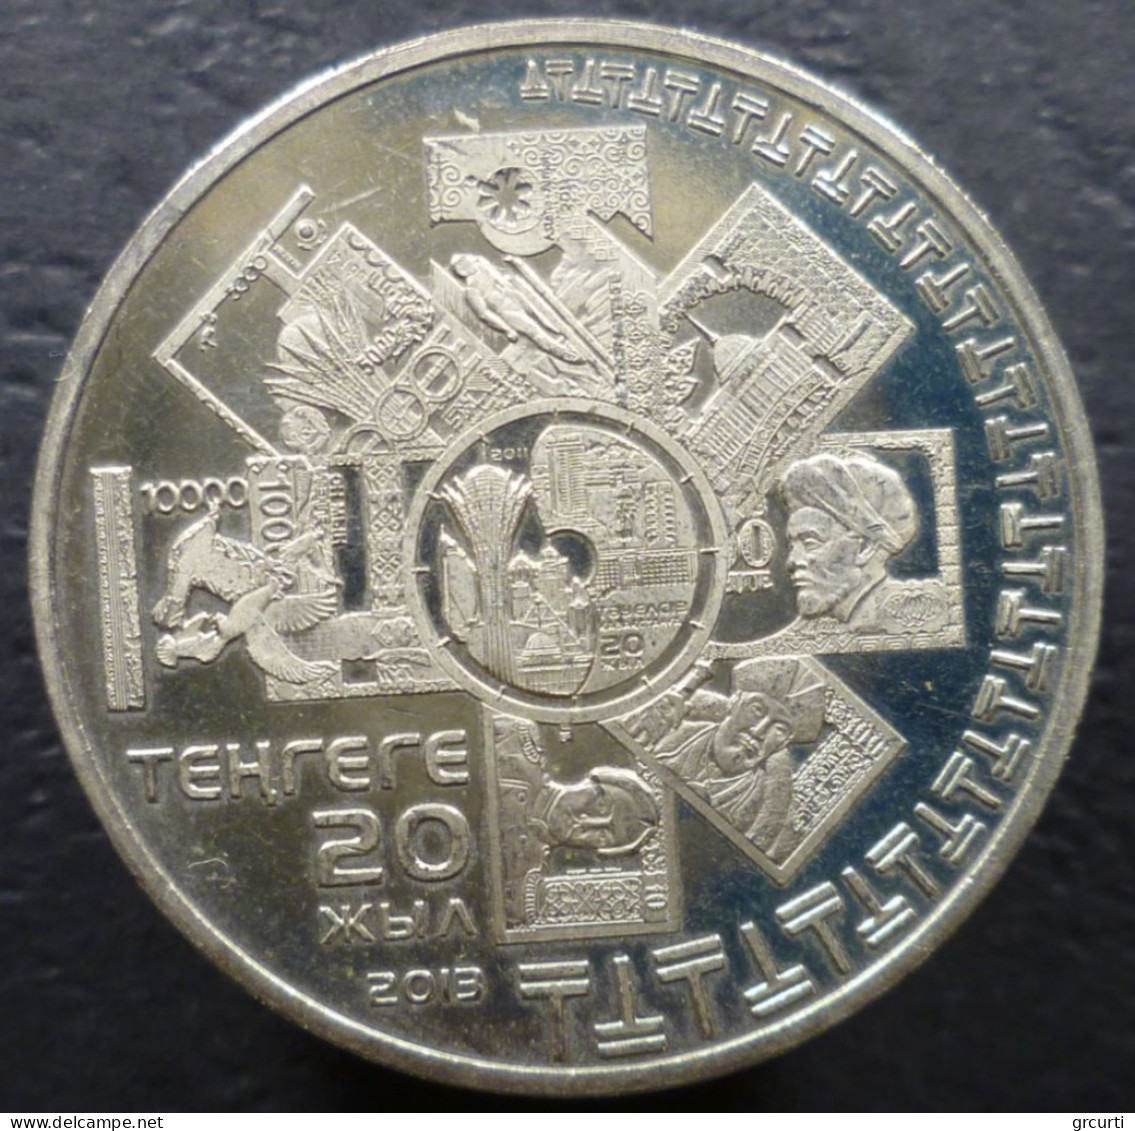 Kazakistan - 50 Tenge 2013 - 20° Valuta Nazionale - UC# 108 - Kazakhstan